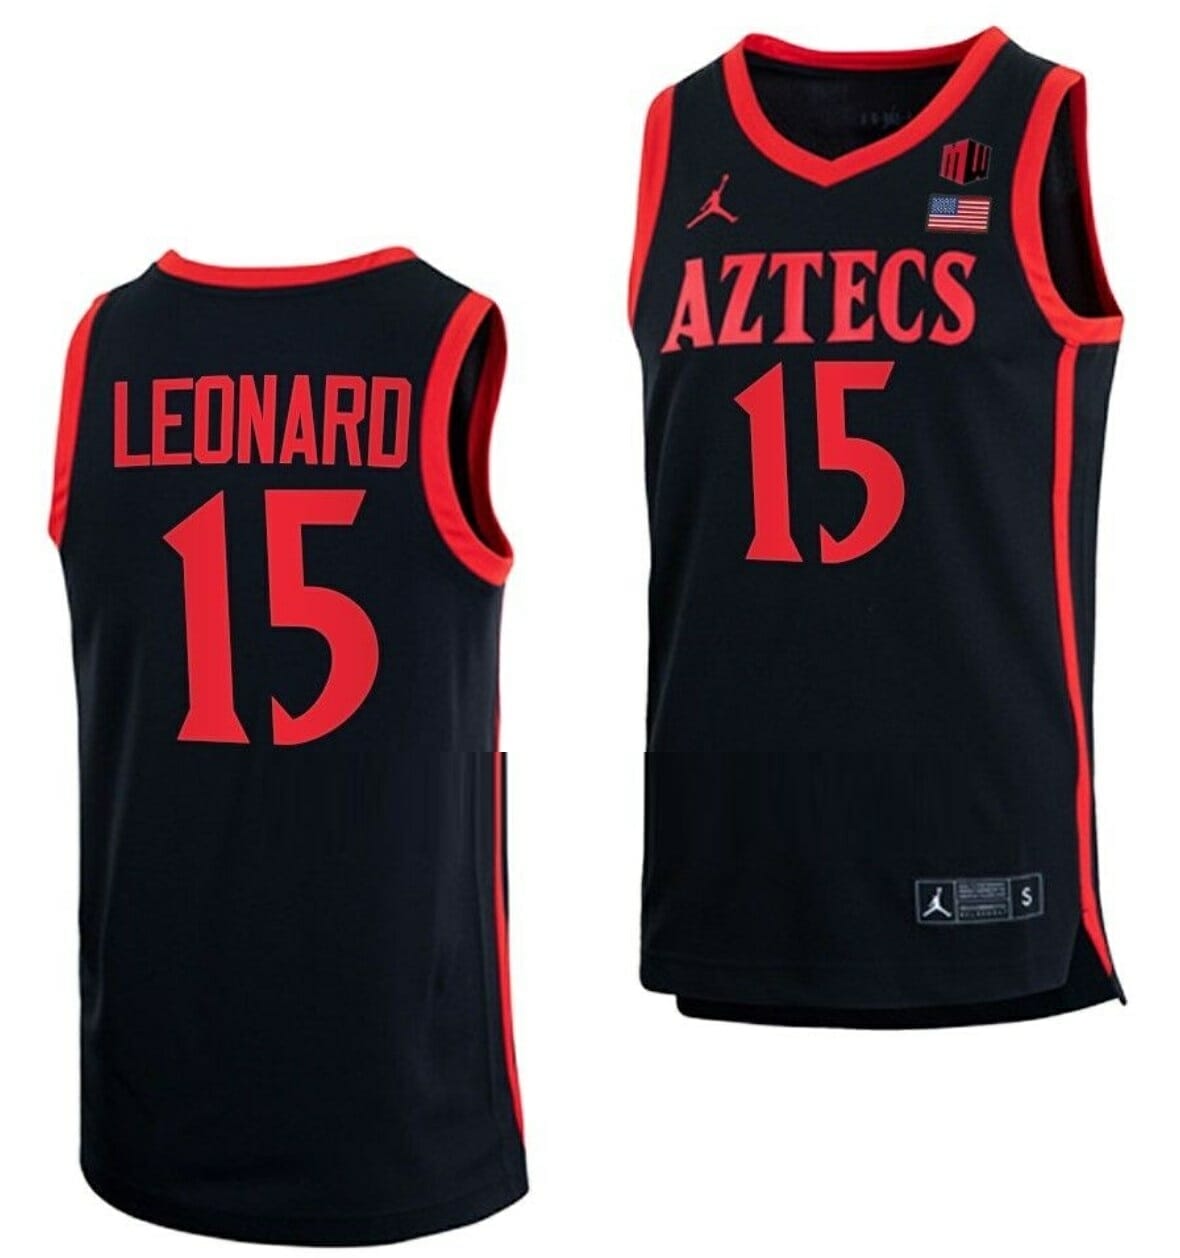 Available] New Kawhi Leonard Jersey Basketball Black #15